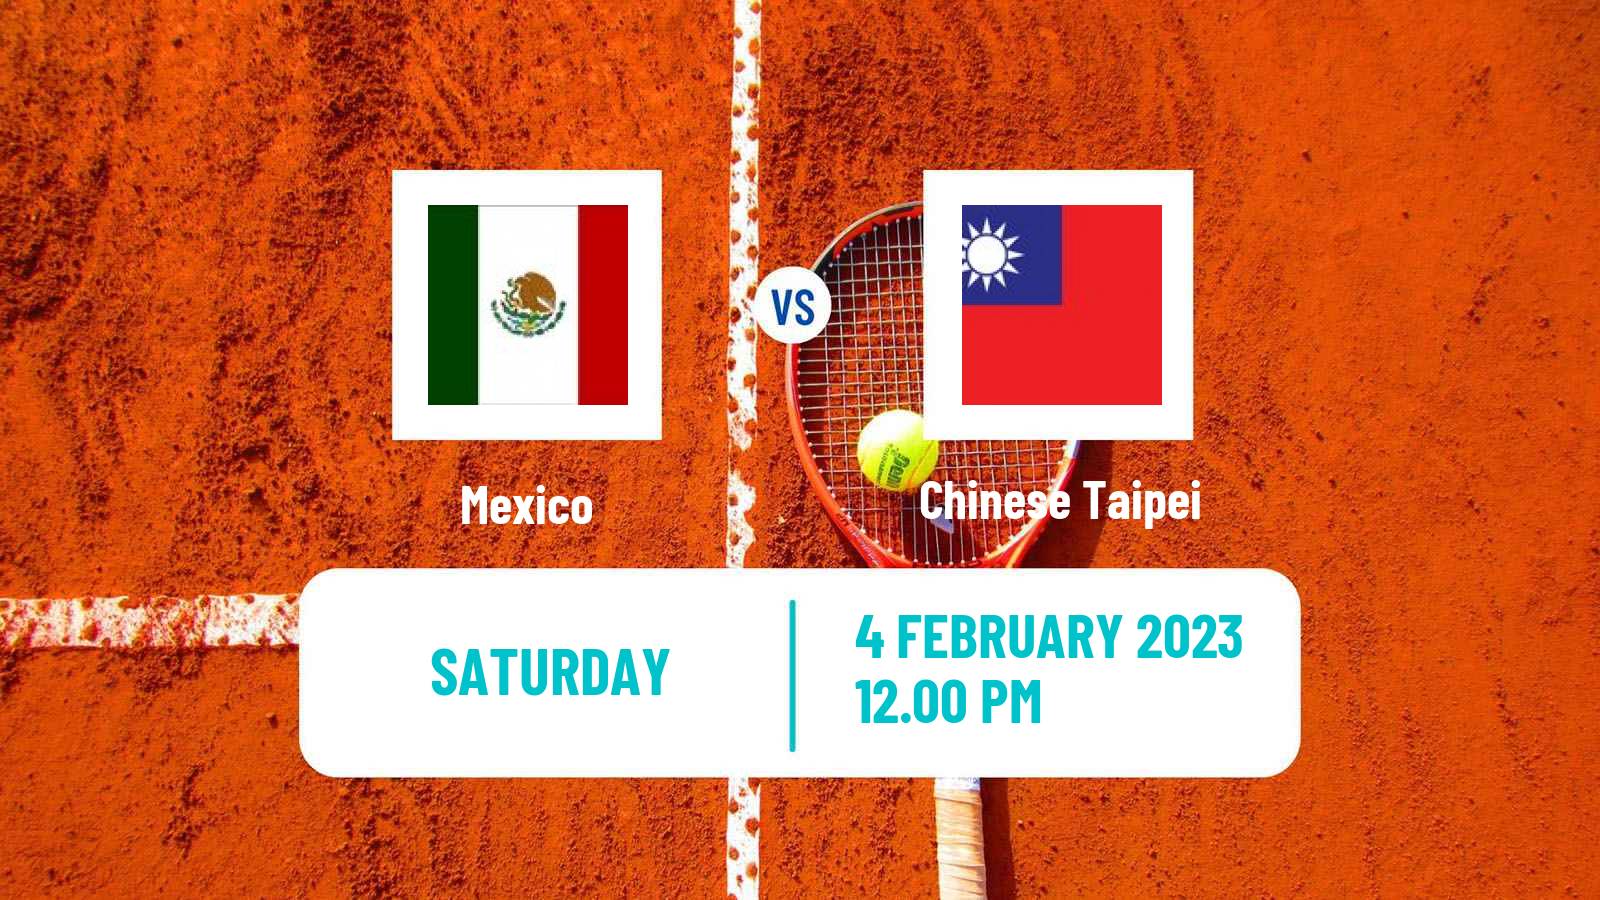 Tennis Davis Cup World Group I Teams Mexico - Chinese Taipei